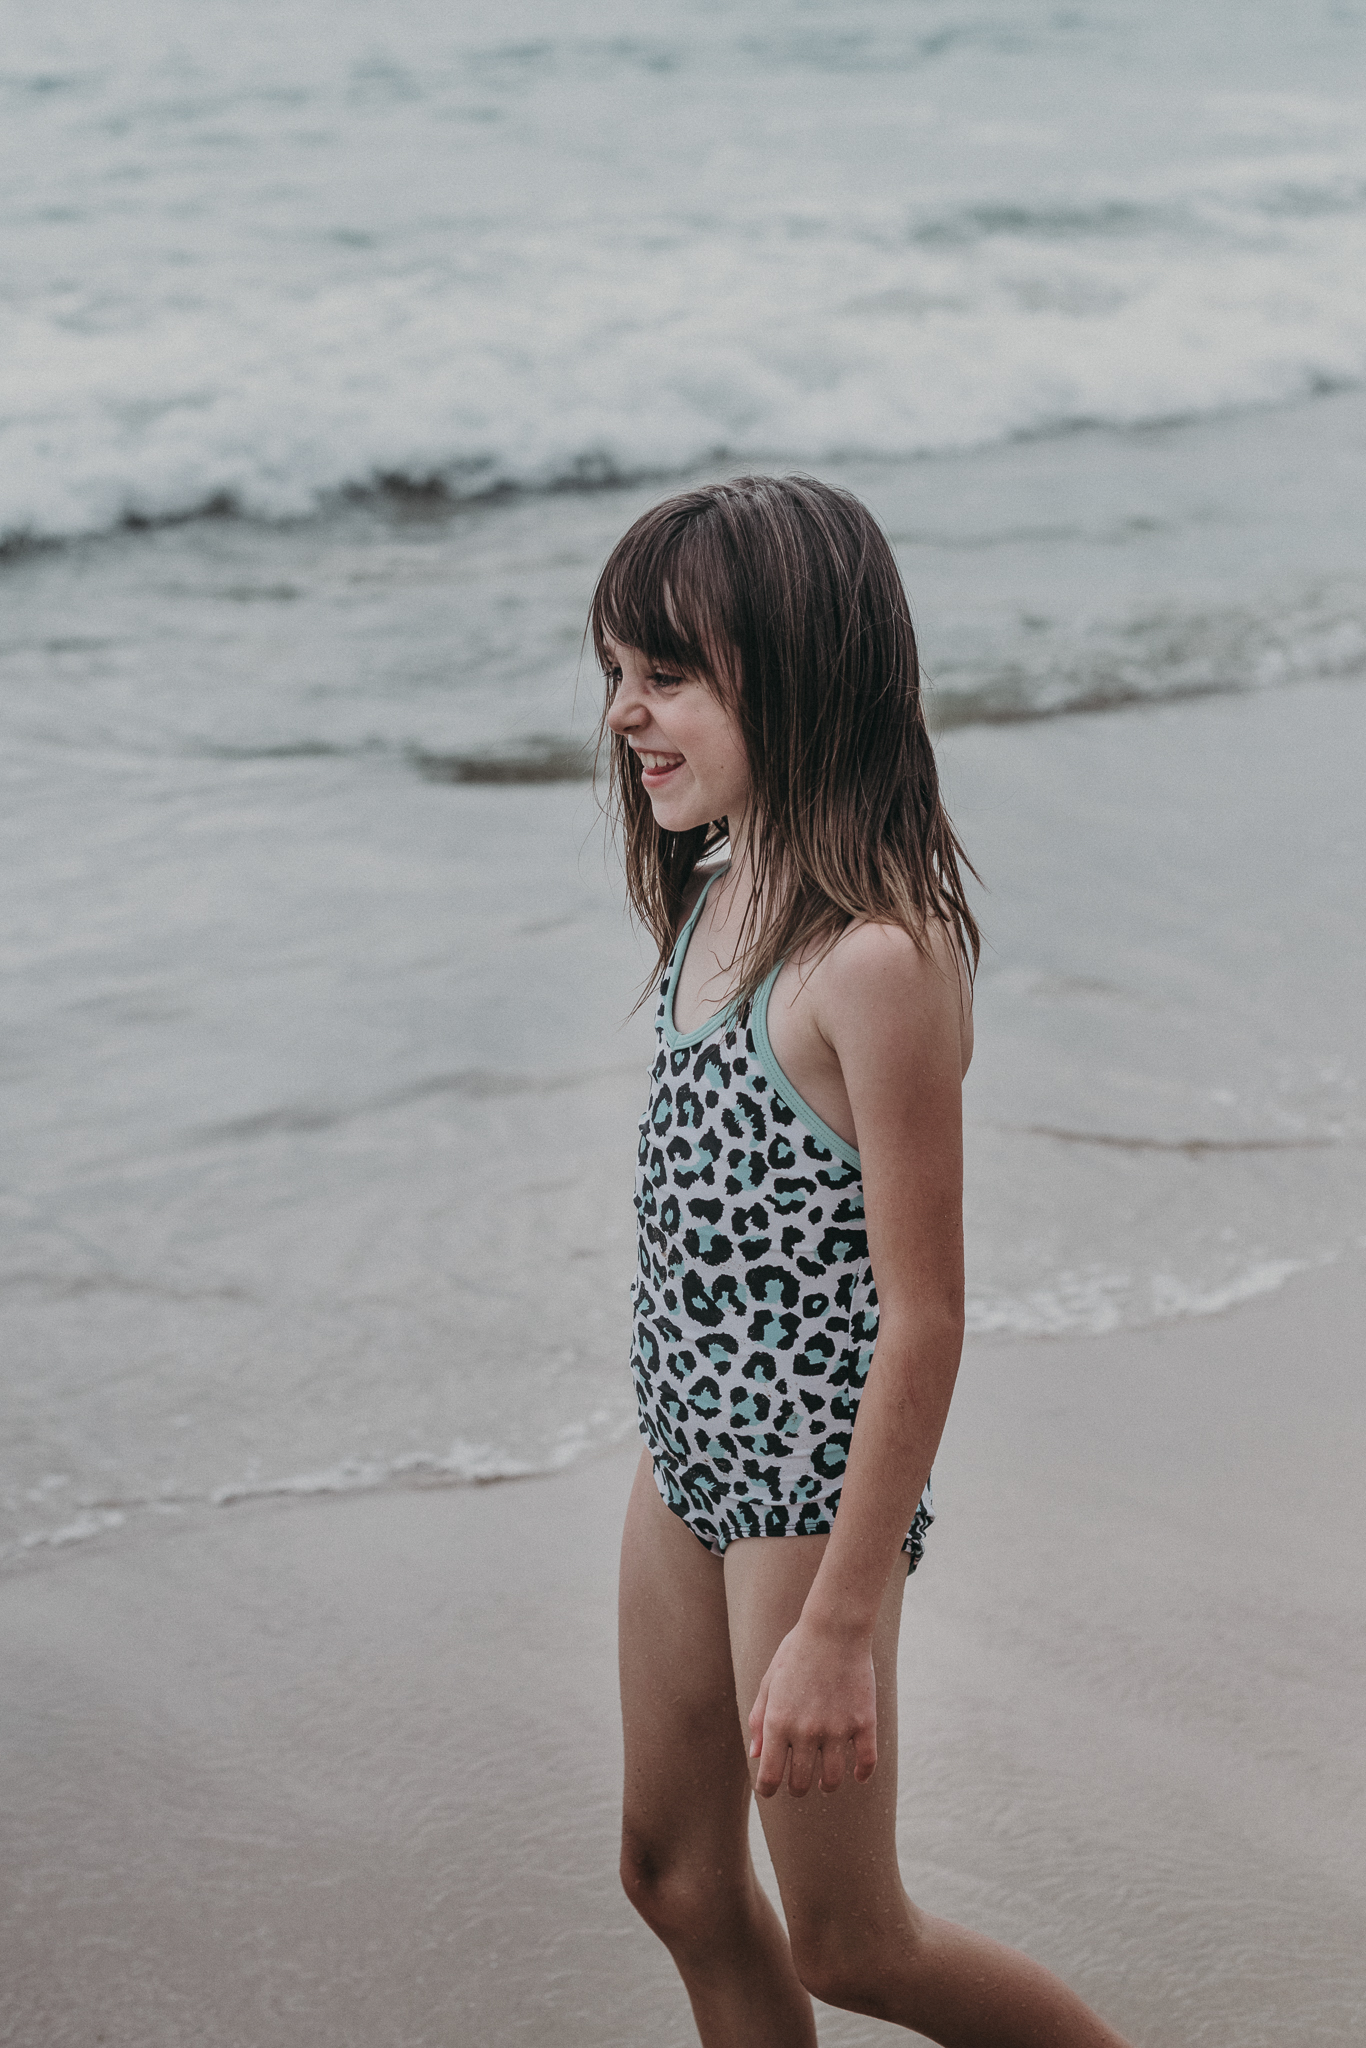 Little girl playing along the beach 